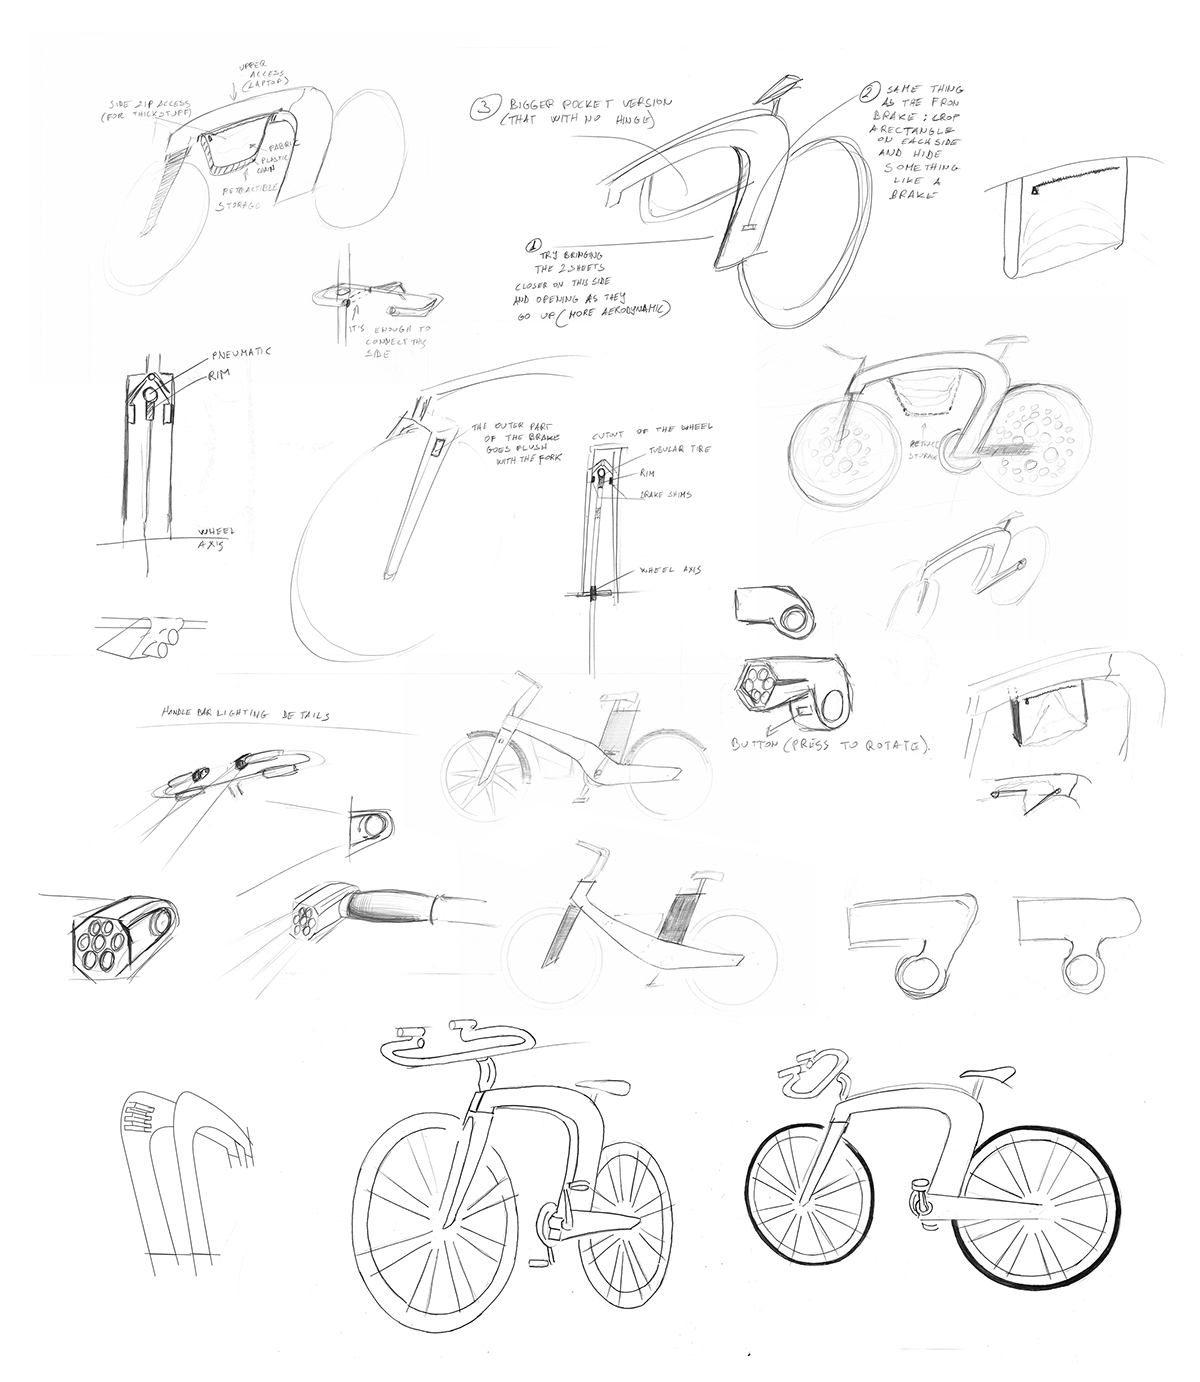 nCycle Bicycle Innovative pocket storage headlights speakers Handlebar lock wheels light fold Bahrain Albania modern